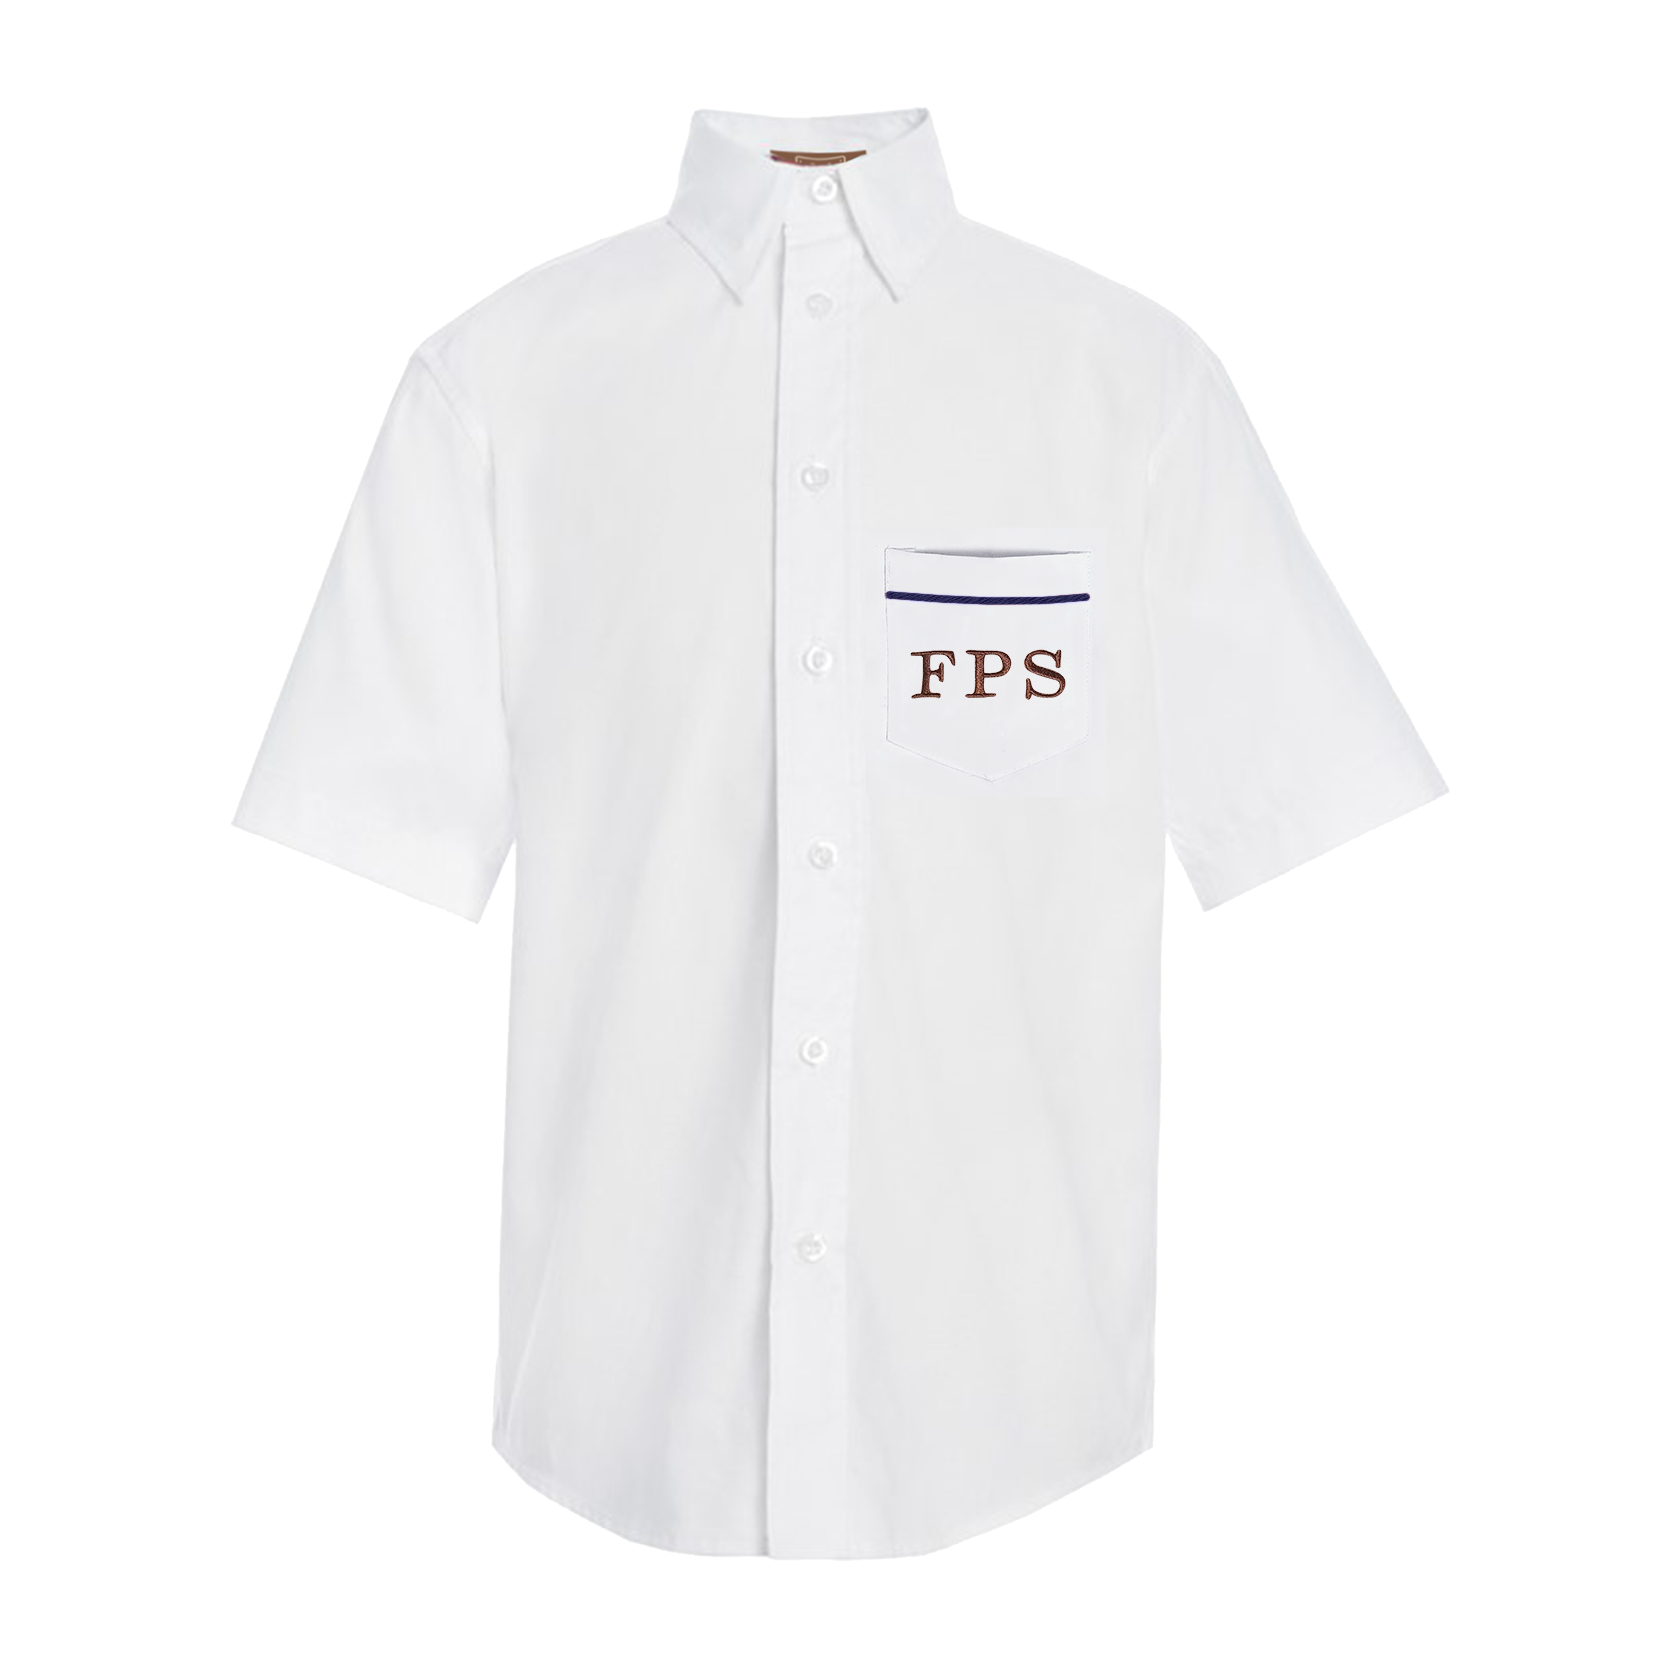 FPS H/S Shirt - Youniform